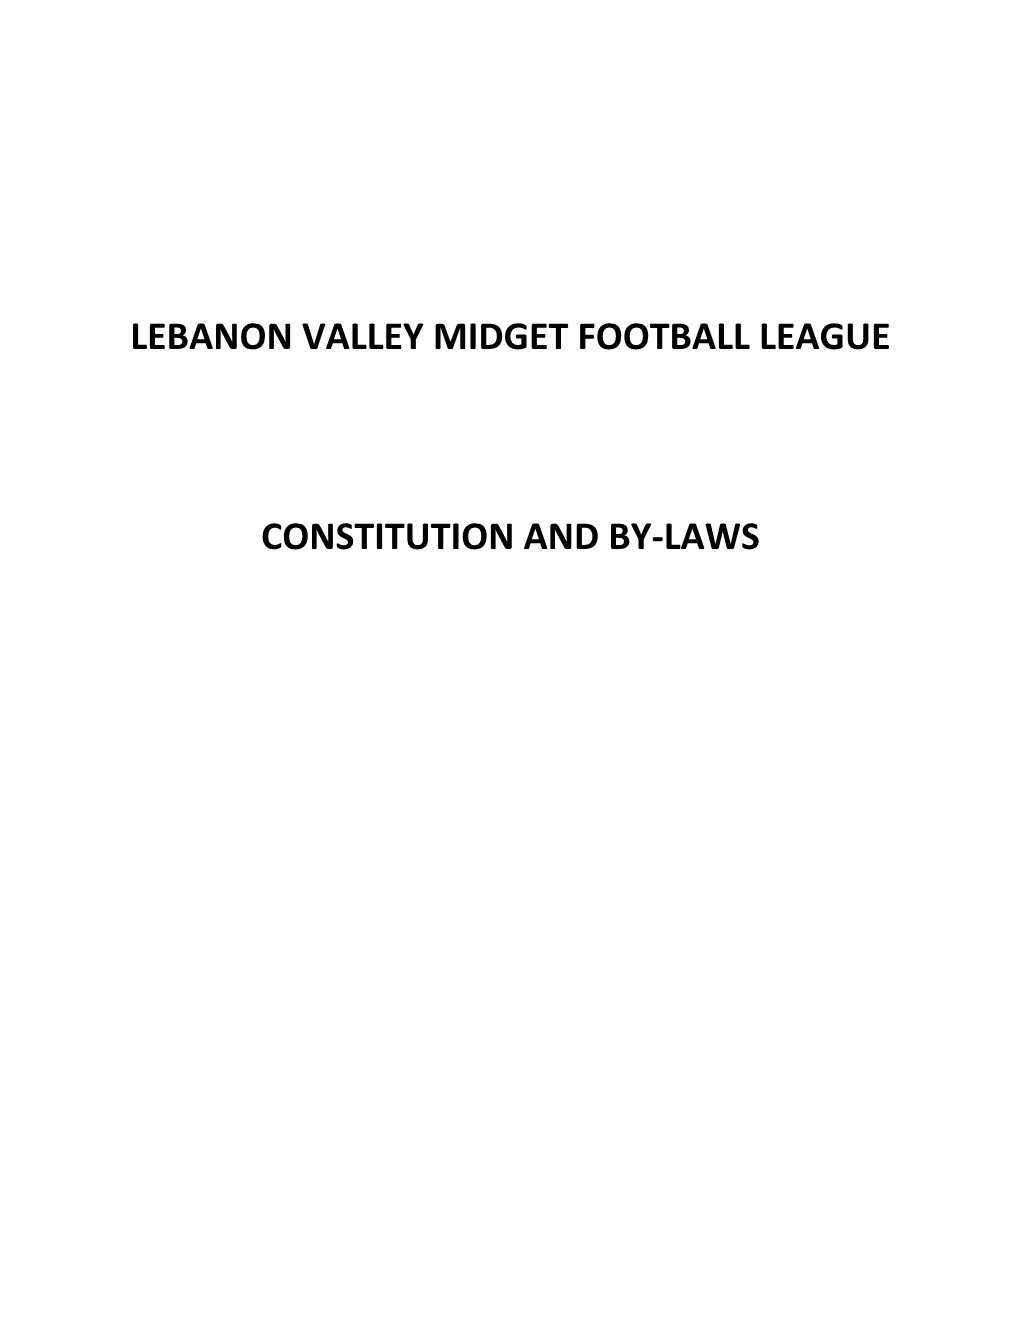 Lebanon Valley Midget Football League